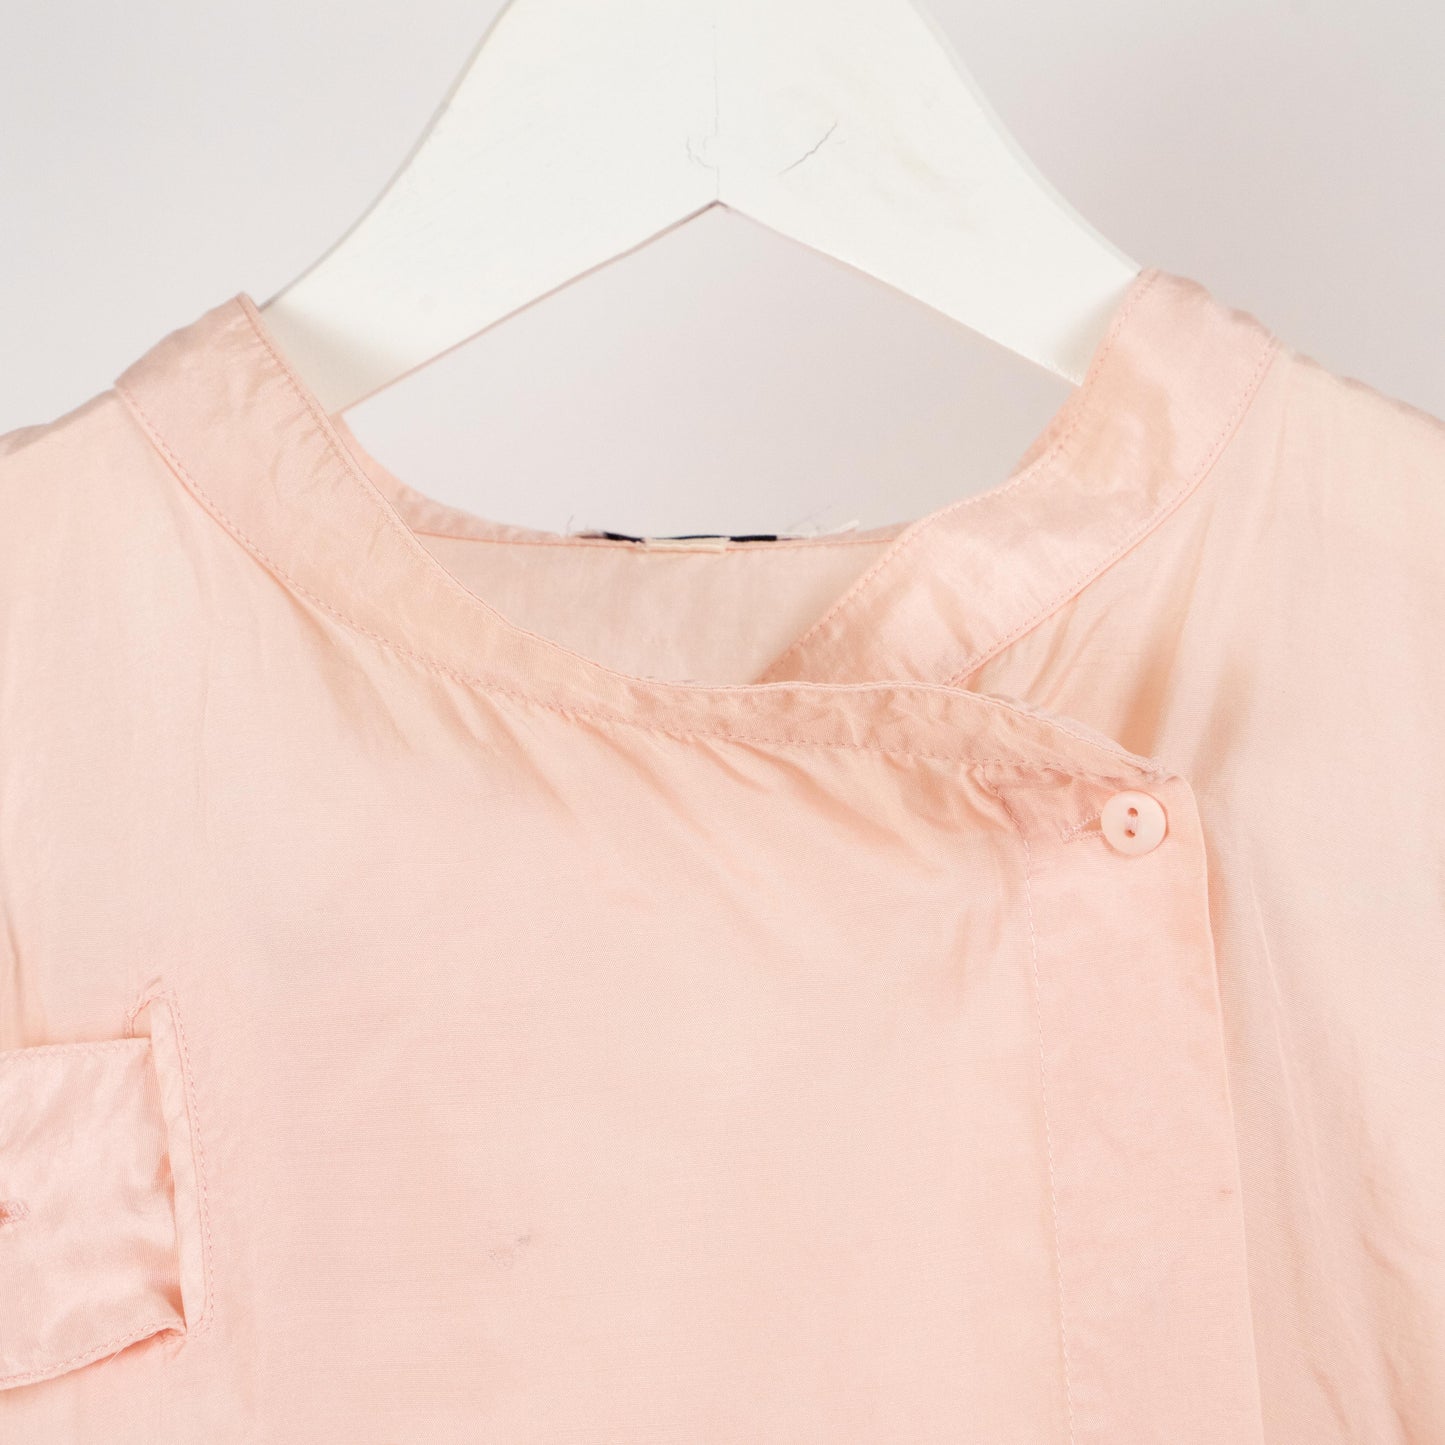 Vintage Rose Silk Shirt